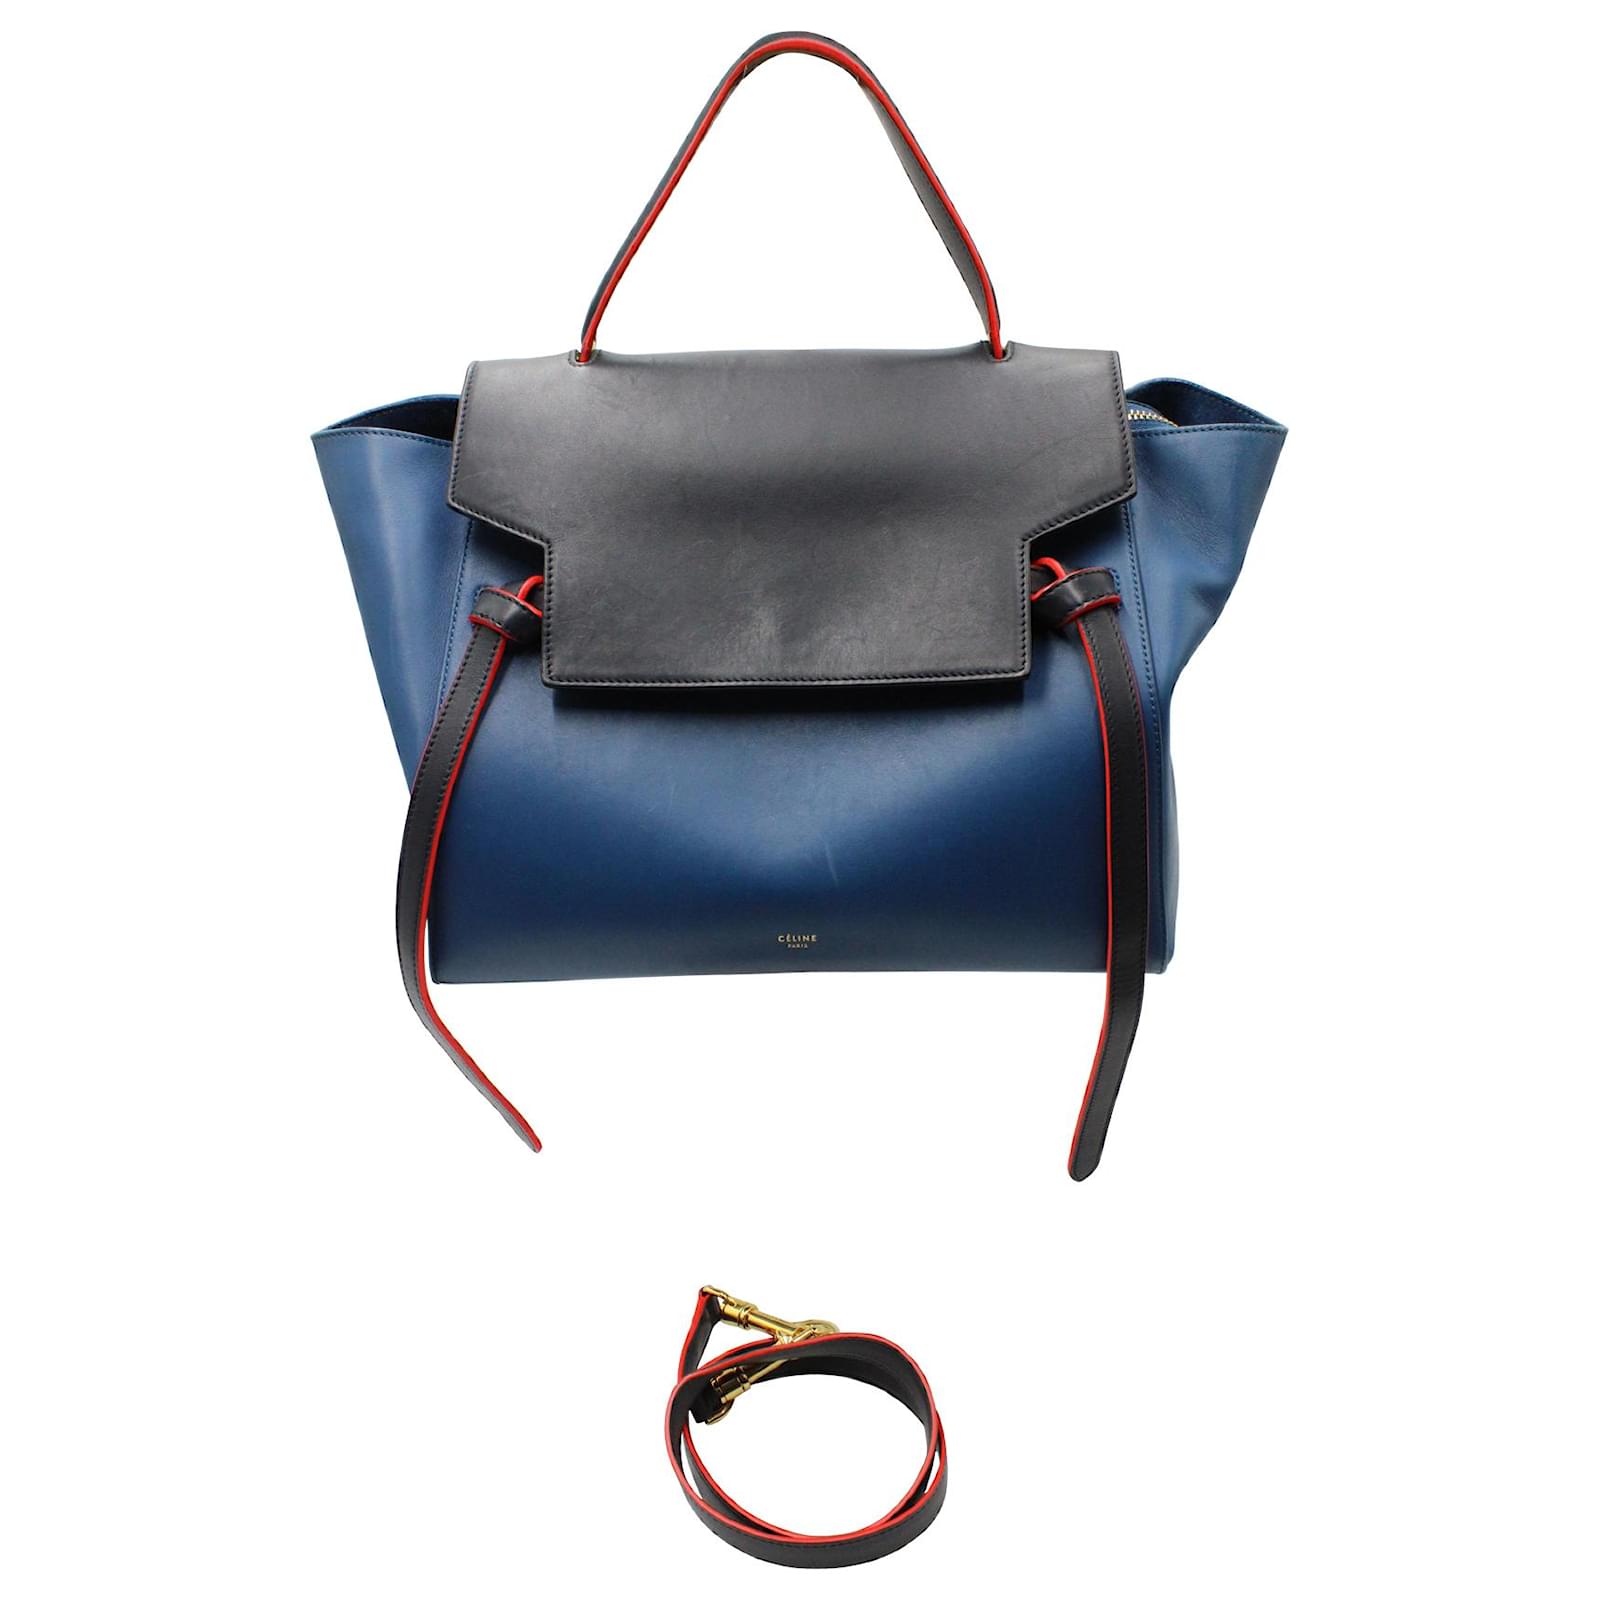 Céline Mini Belt Bag in Blue Calfskin Leather Pony-style calfskin